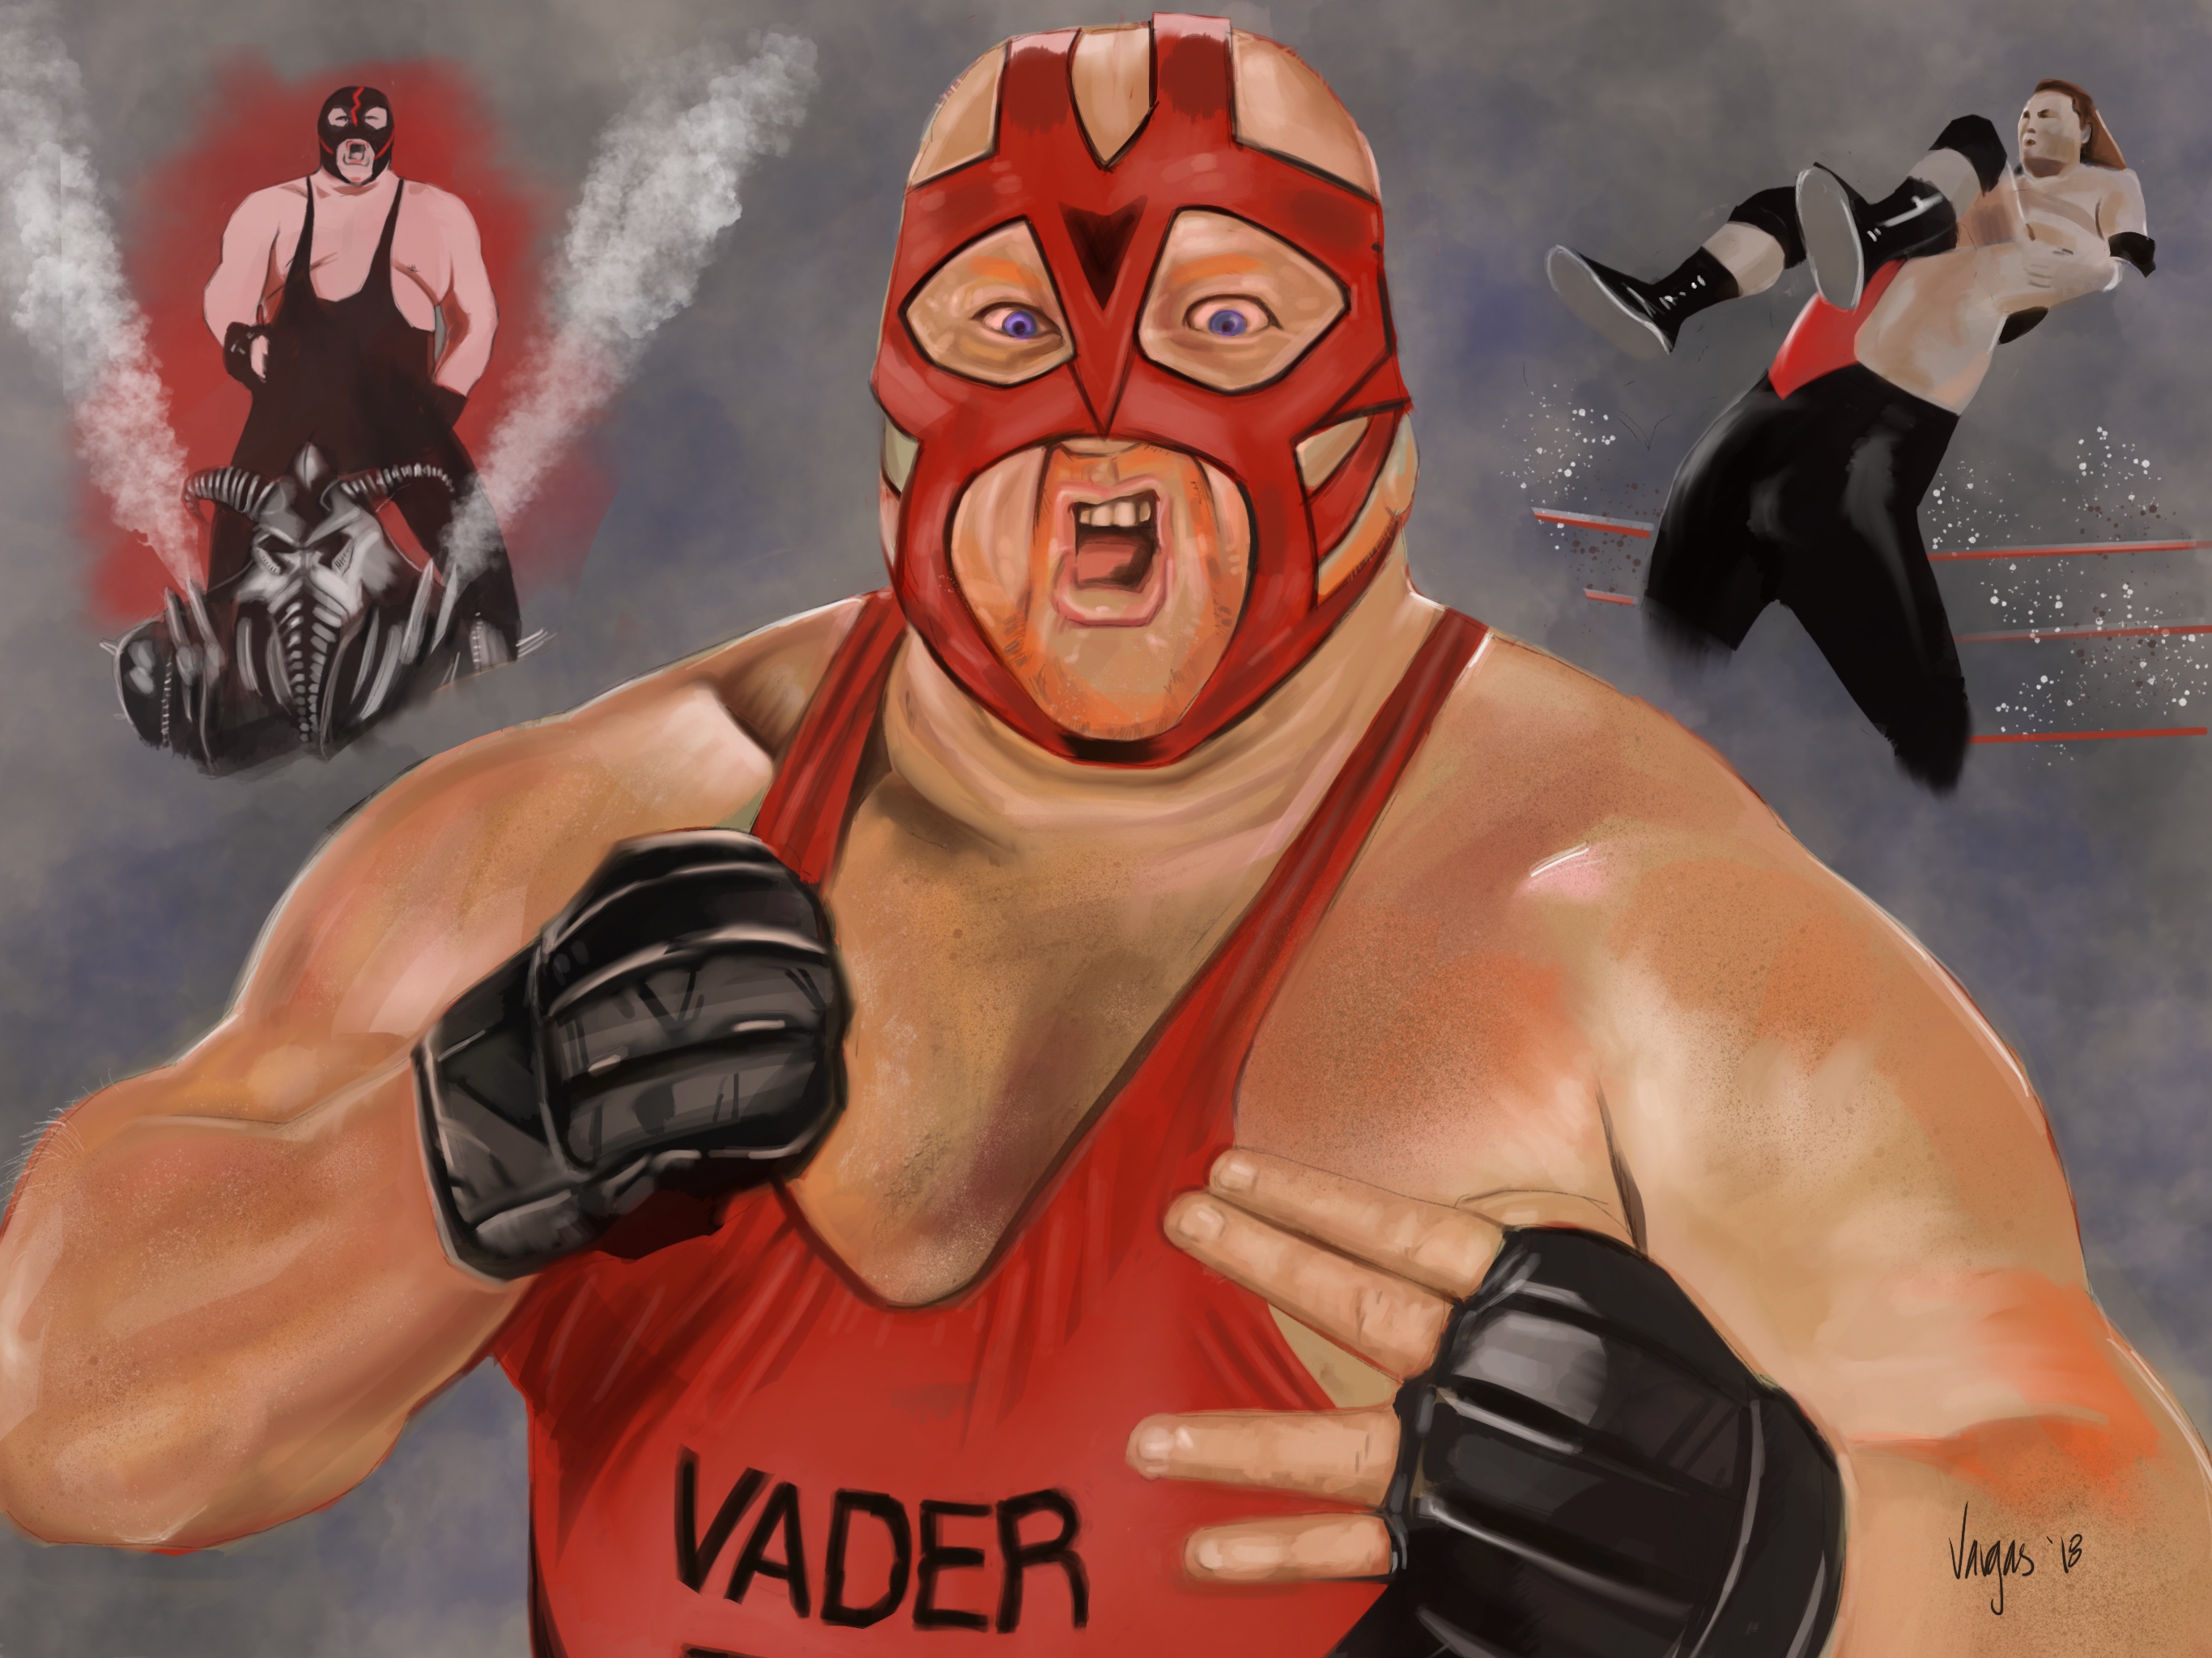 Big Van Vader - Steemit.